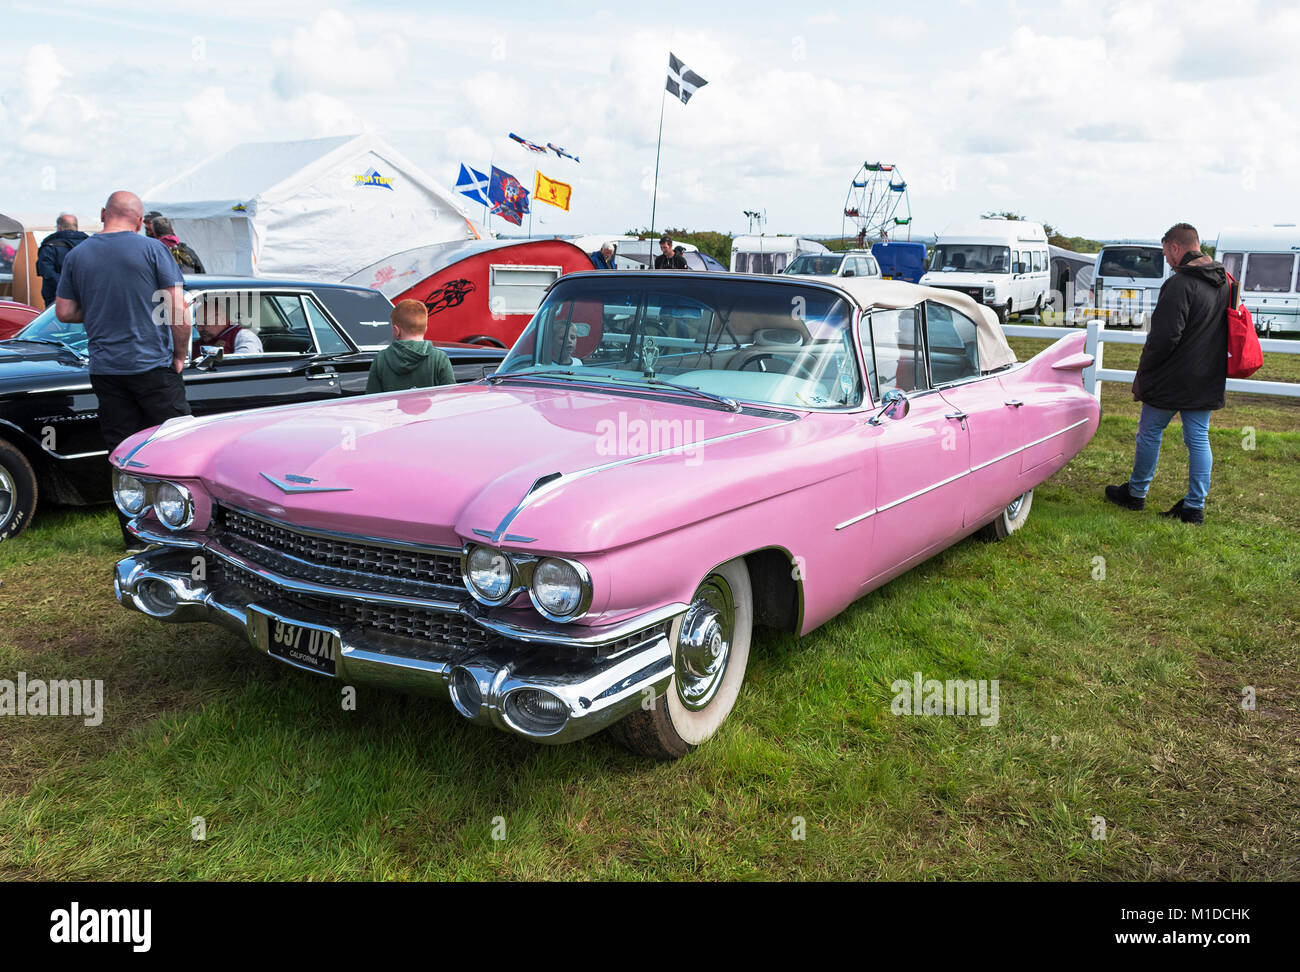 pink vintage classic cadillac american motor car Stock Photo